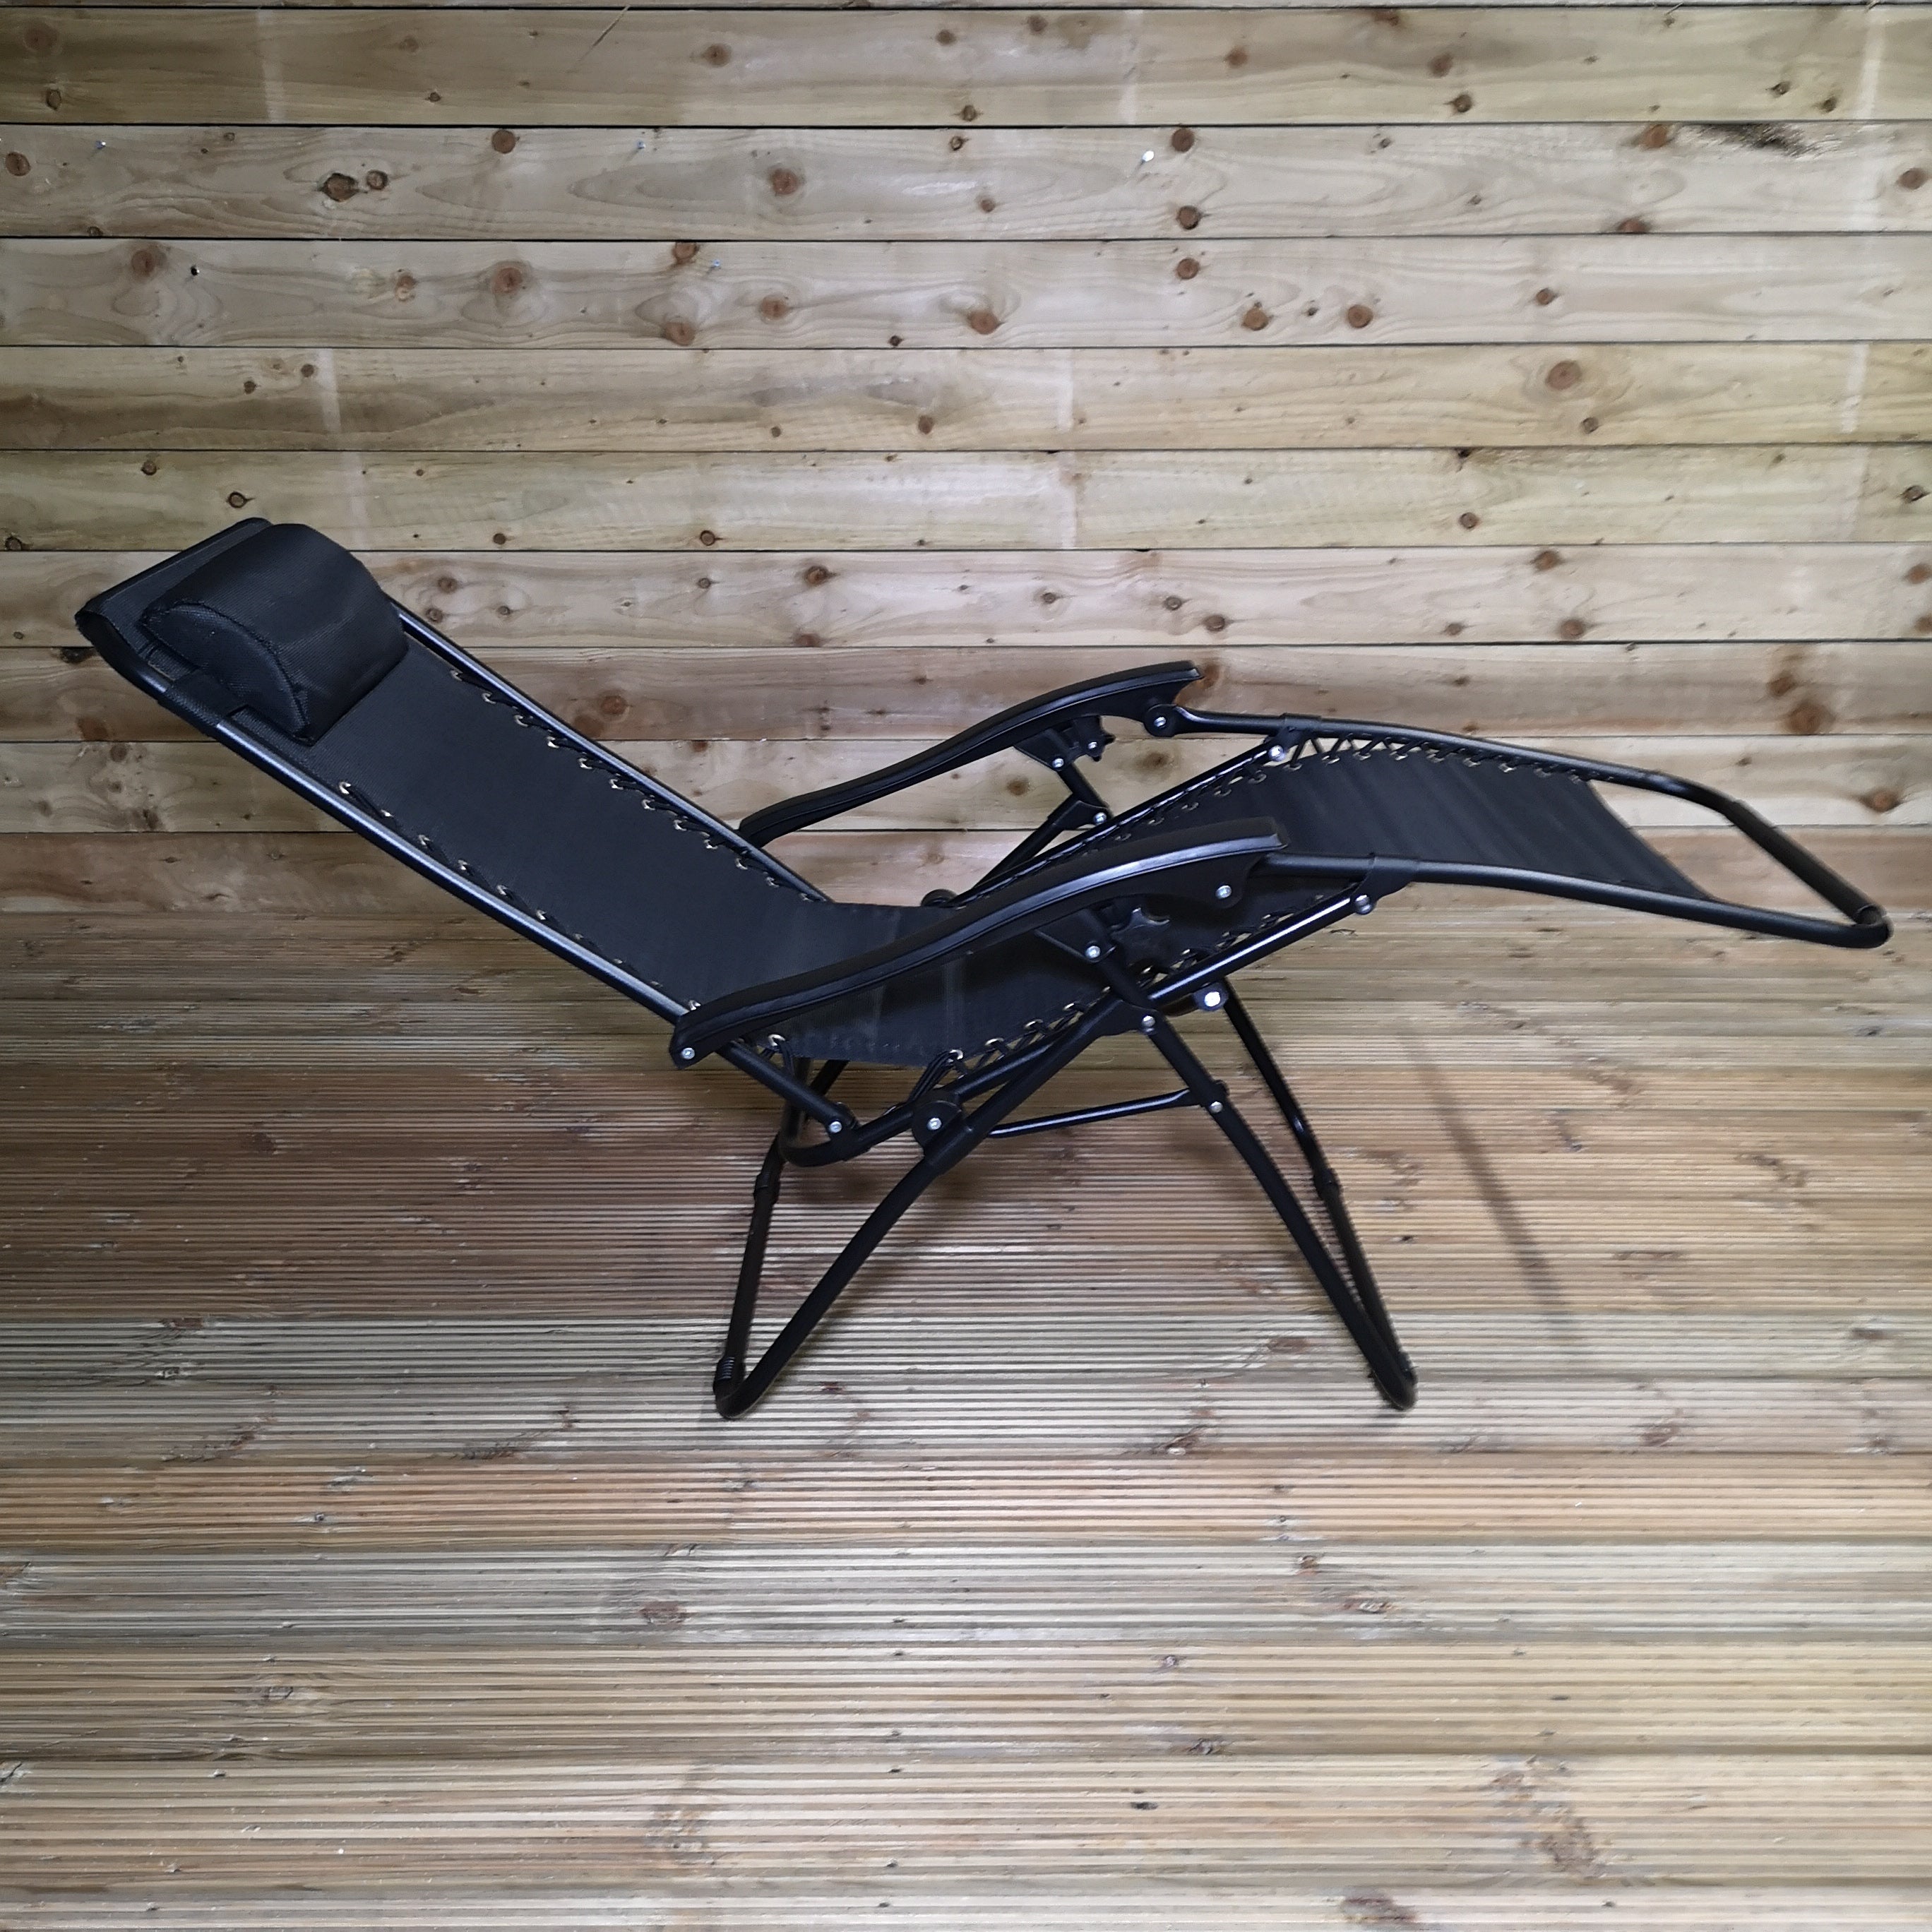 Pair of Multi Position Textoline Garden Relaxer Chair Lounger - All Black